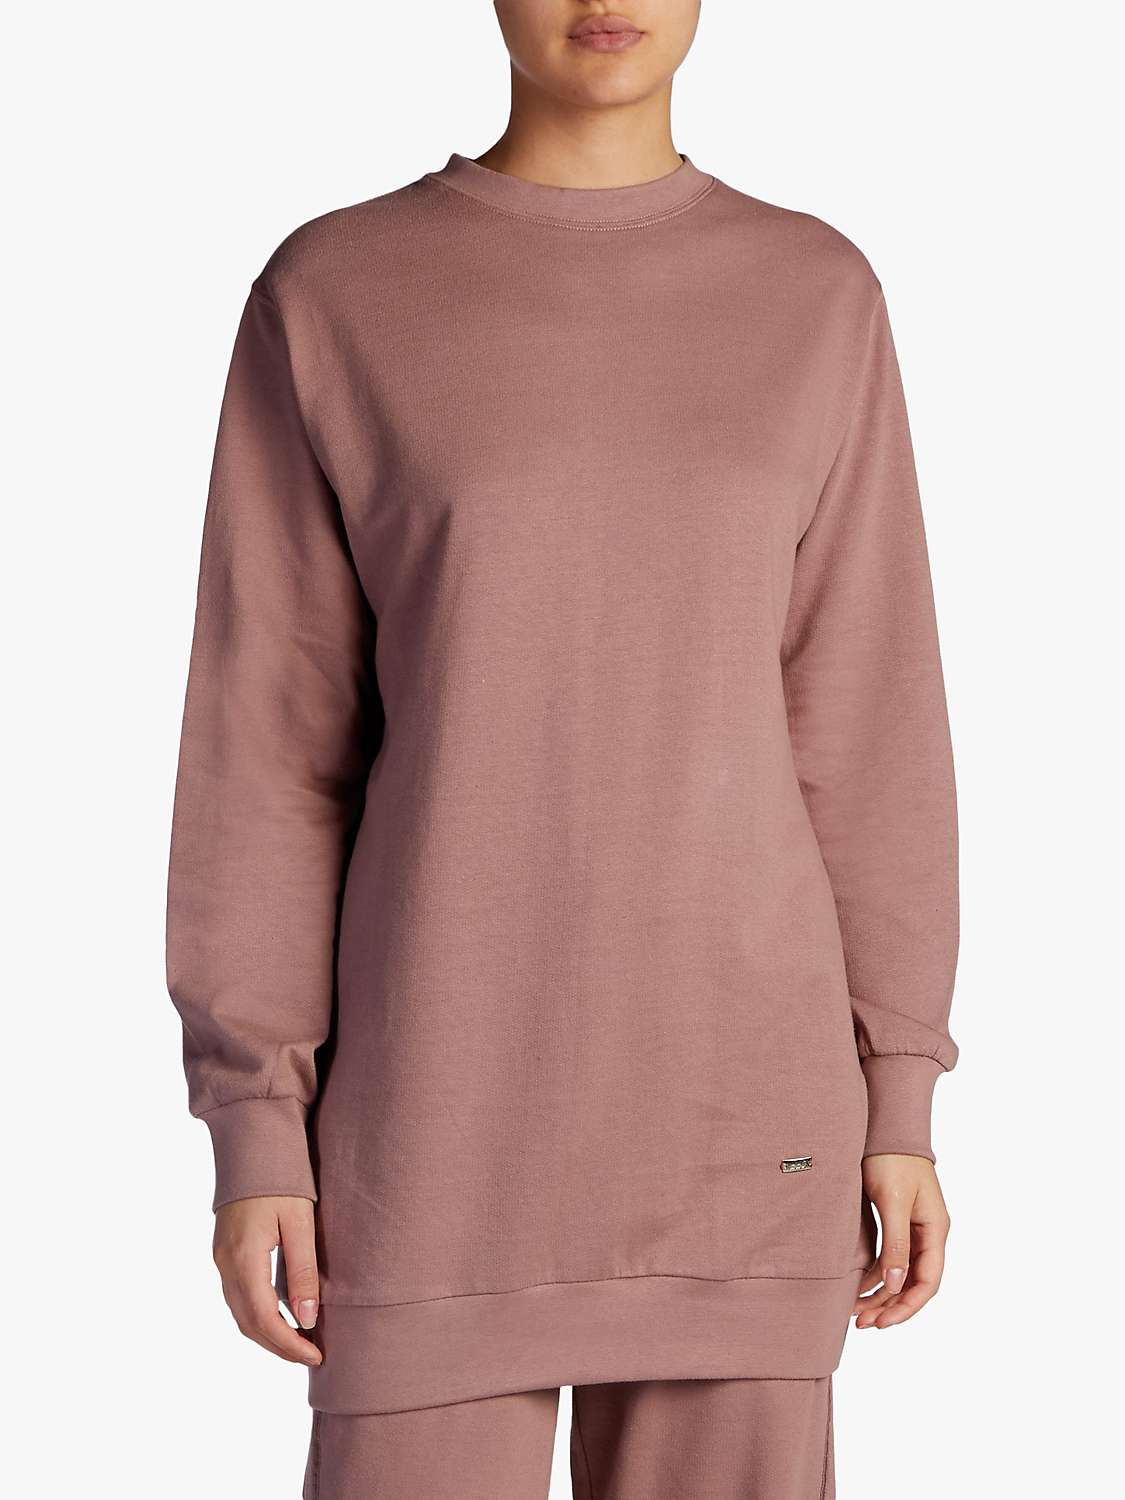 Buy Aab Modest Sweatshirt Online at johnlewis.com